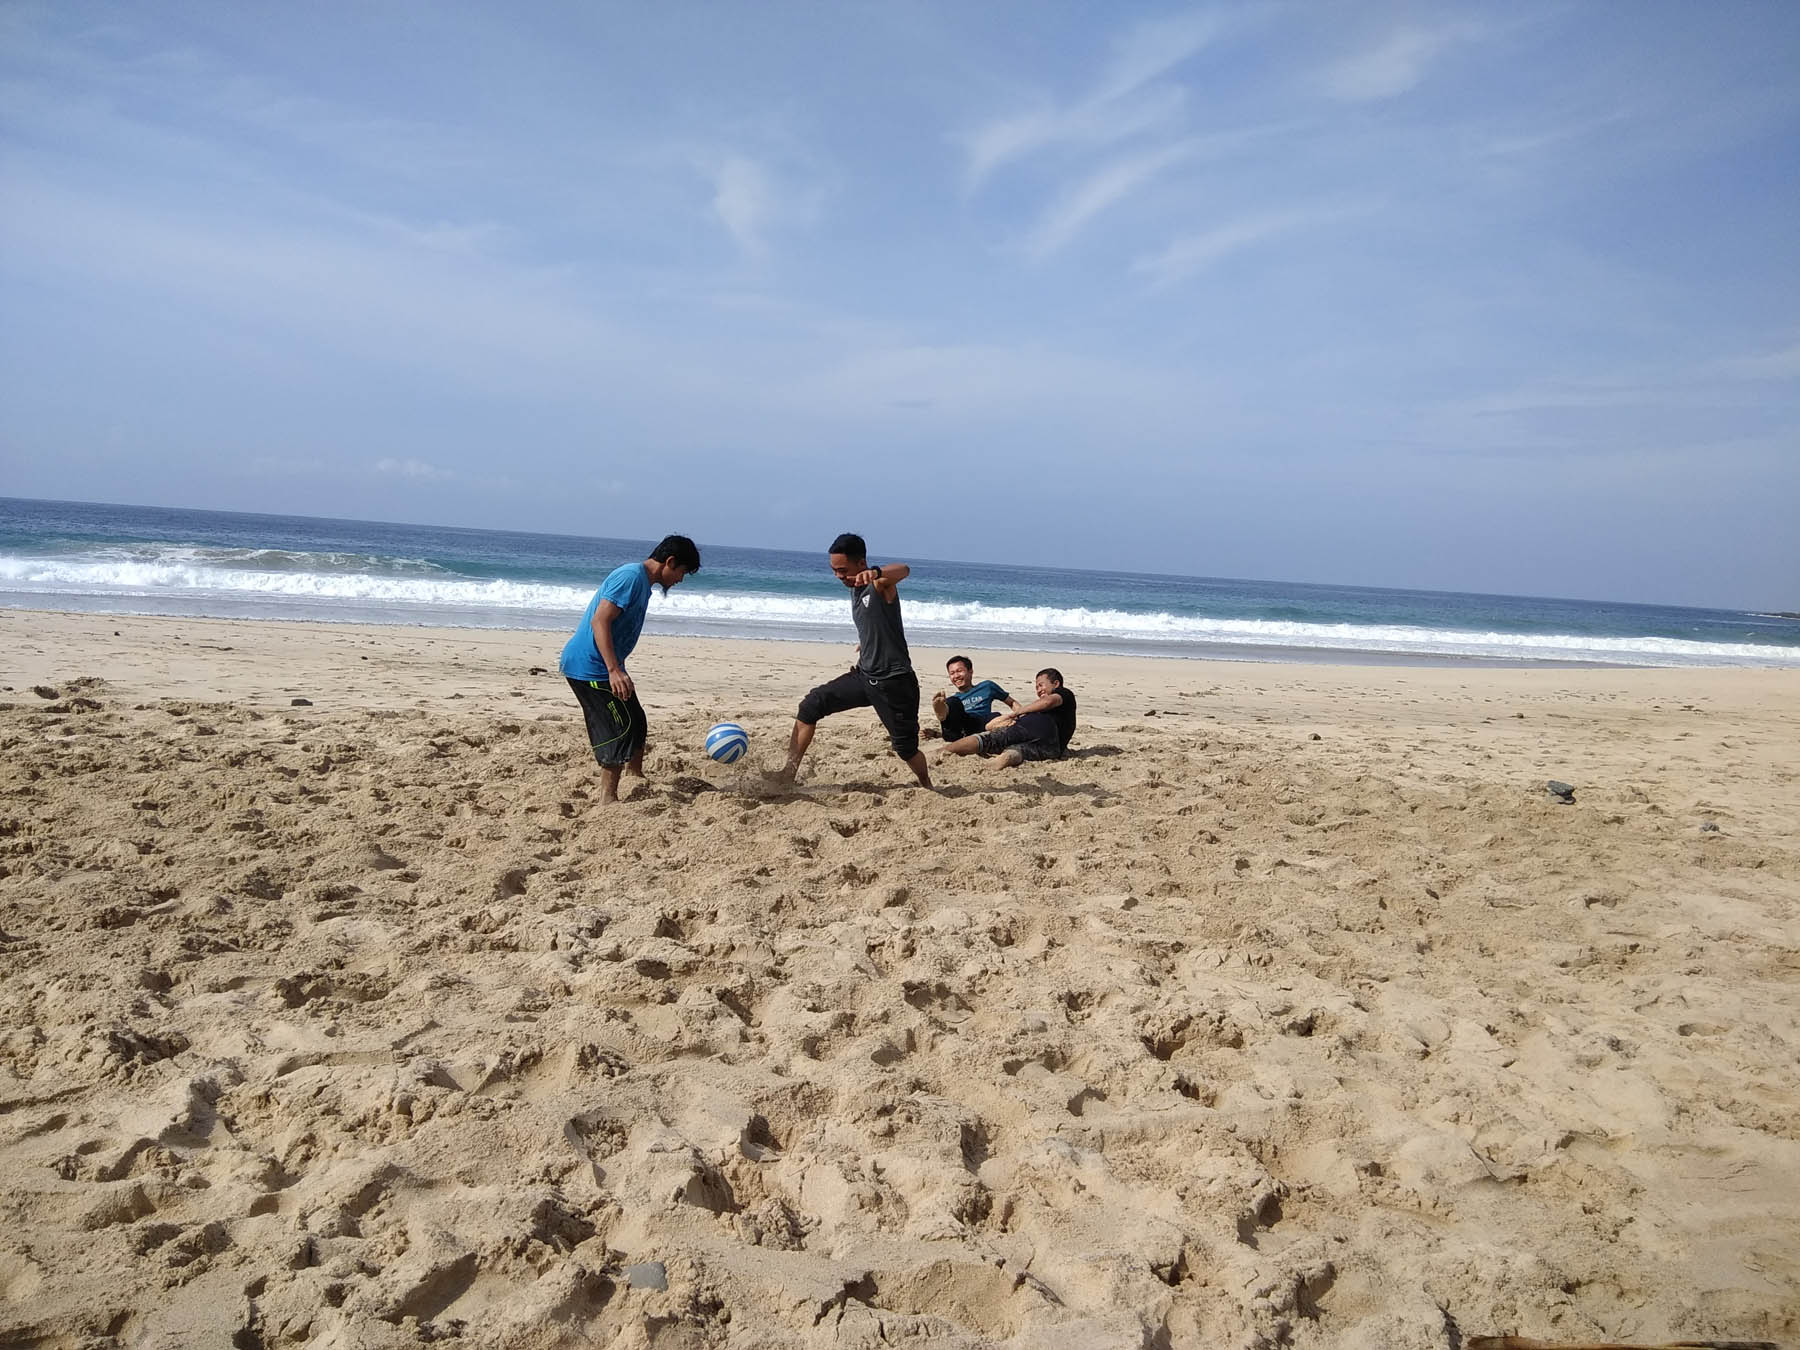 wisatawan sedang bermain sepak bola di tepi pantai